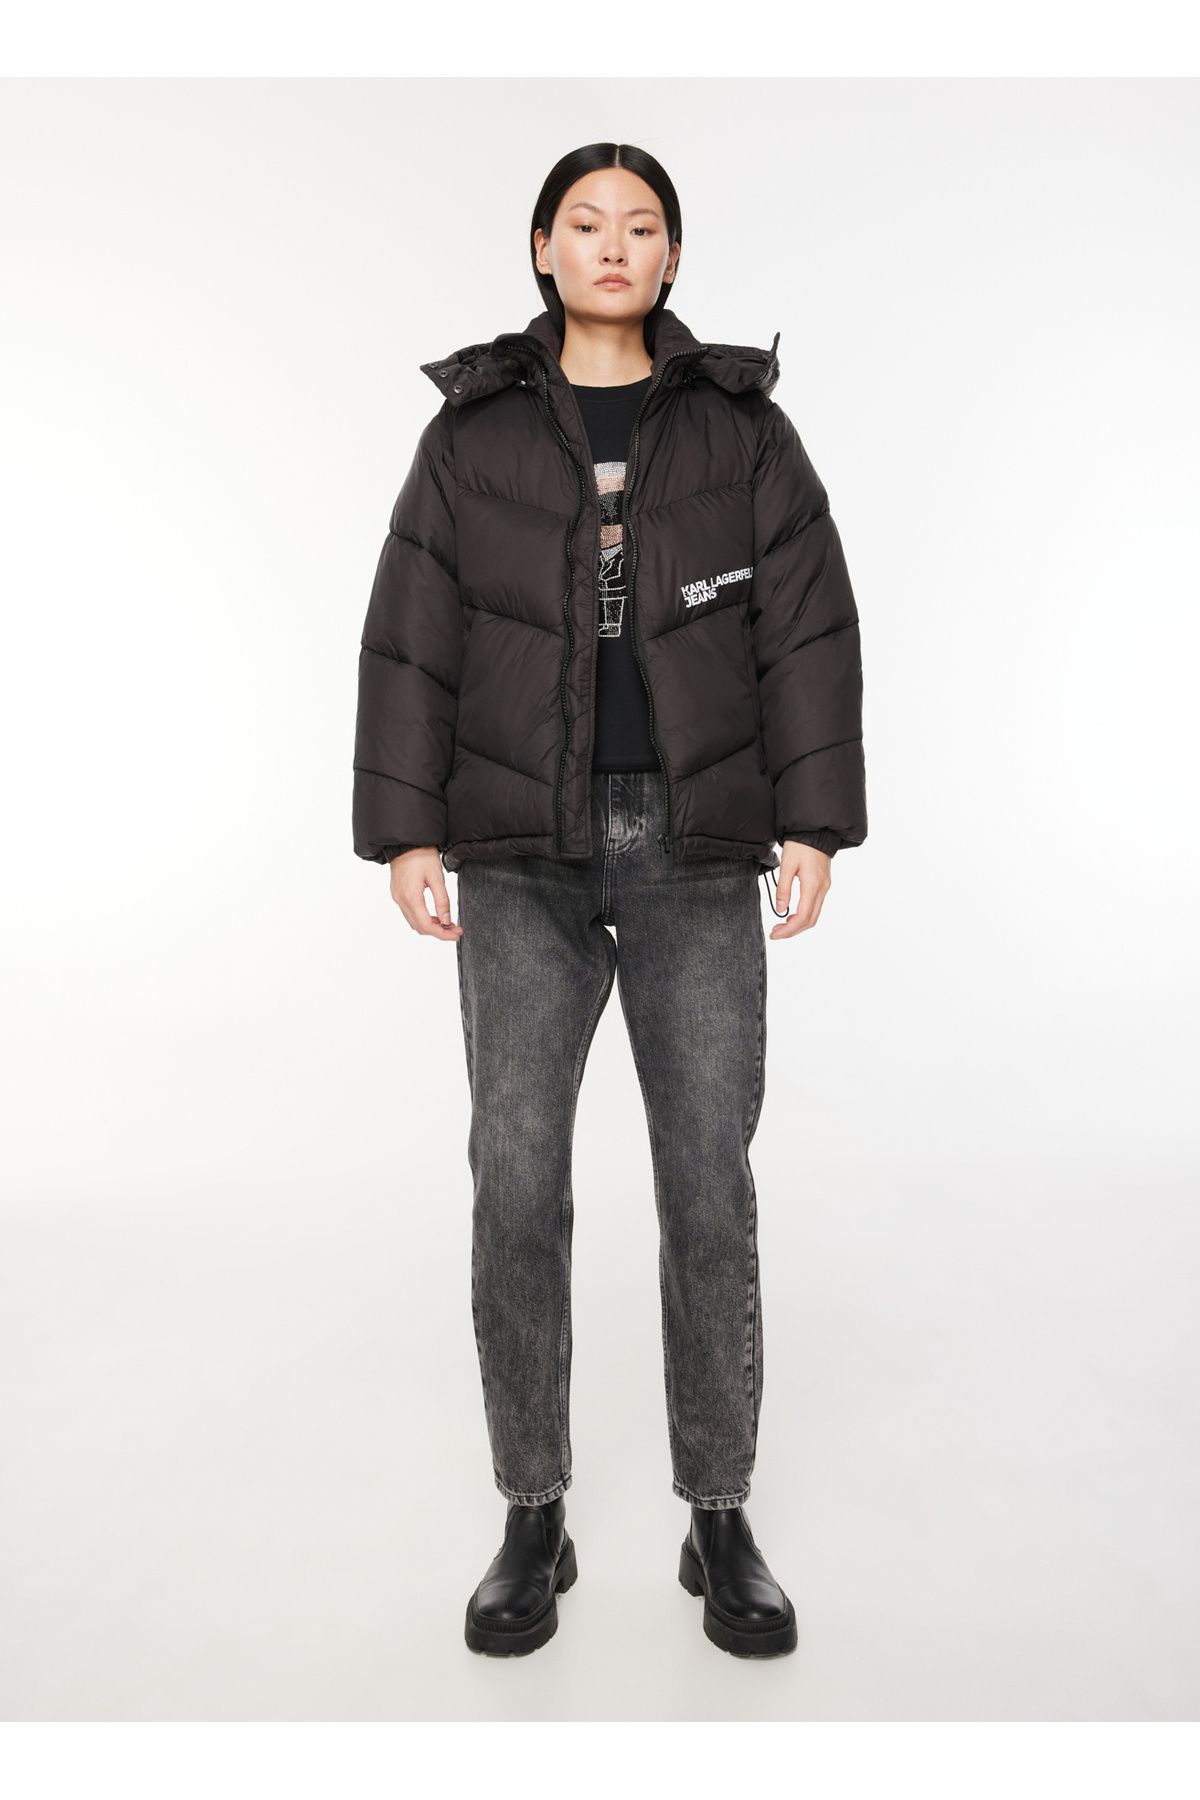 Karl Lagerfeld Jeans Siyah Kadın Mont 235J1552